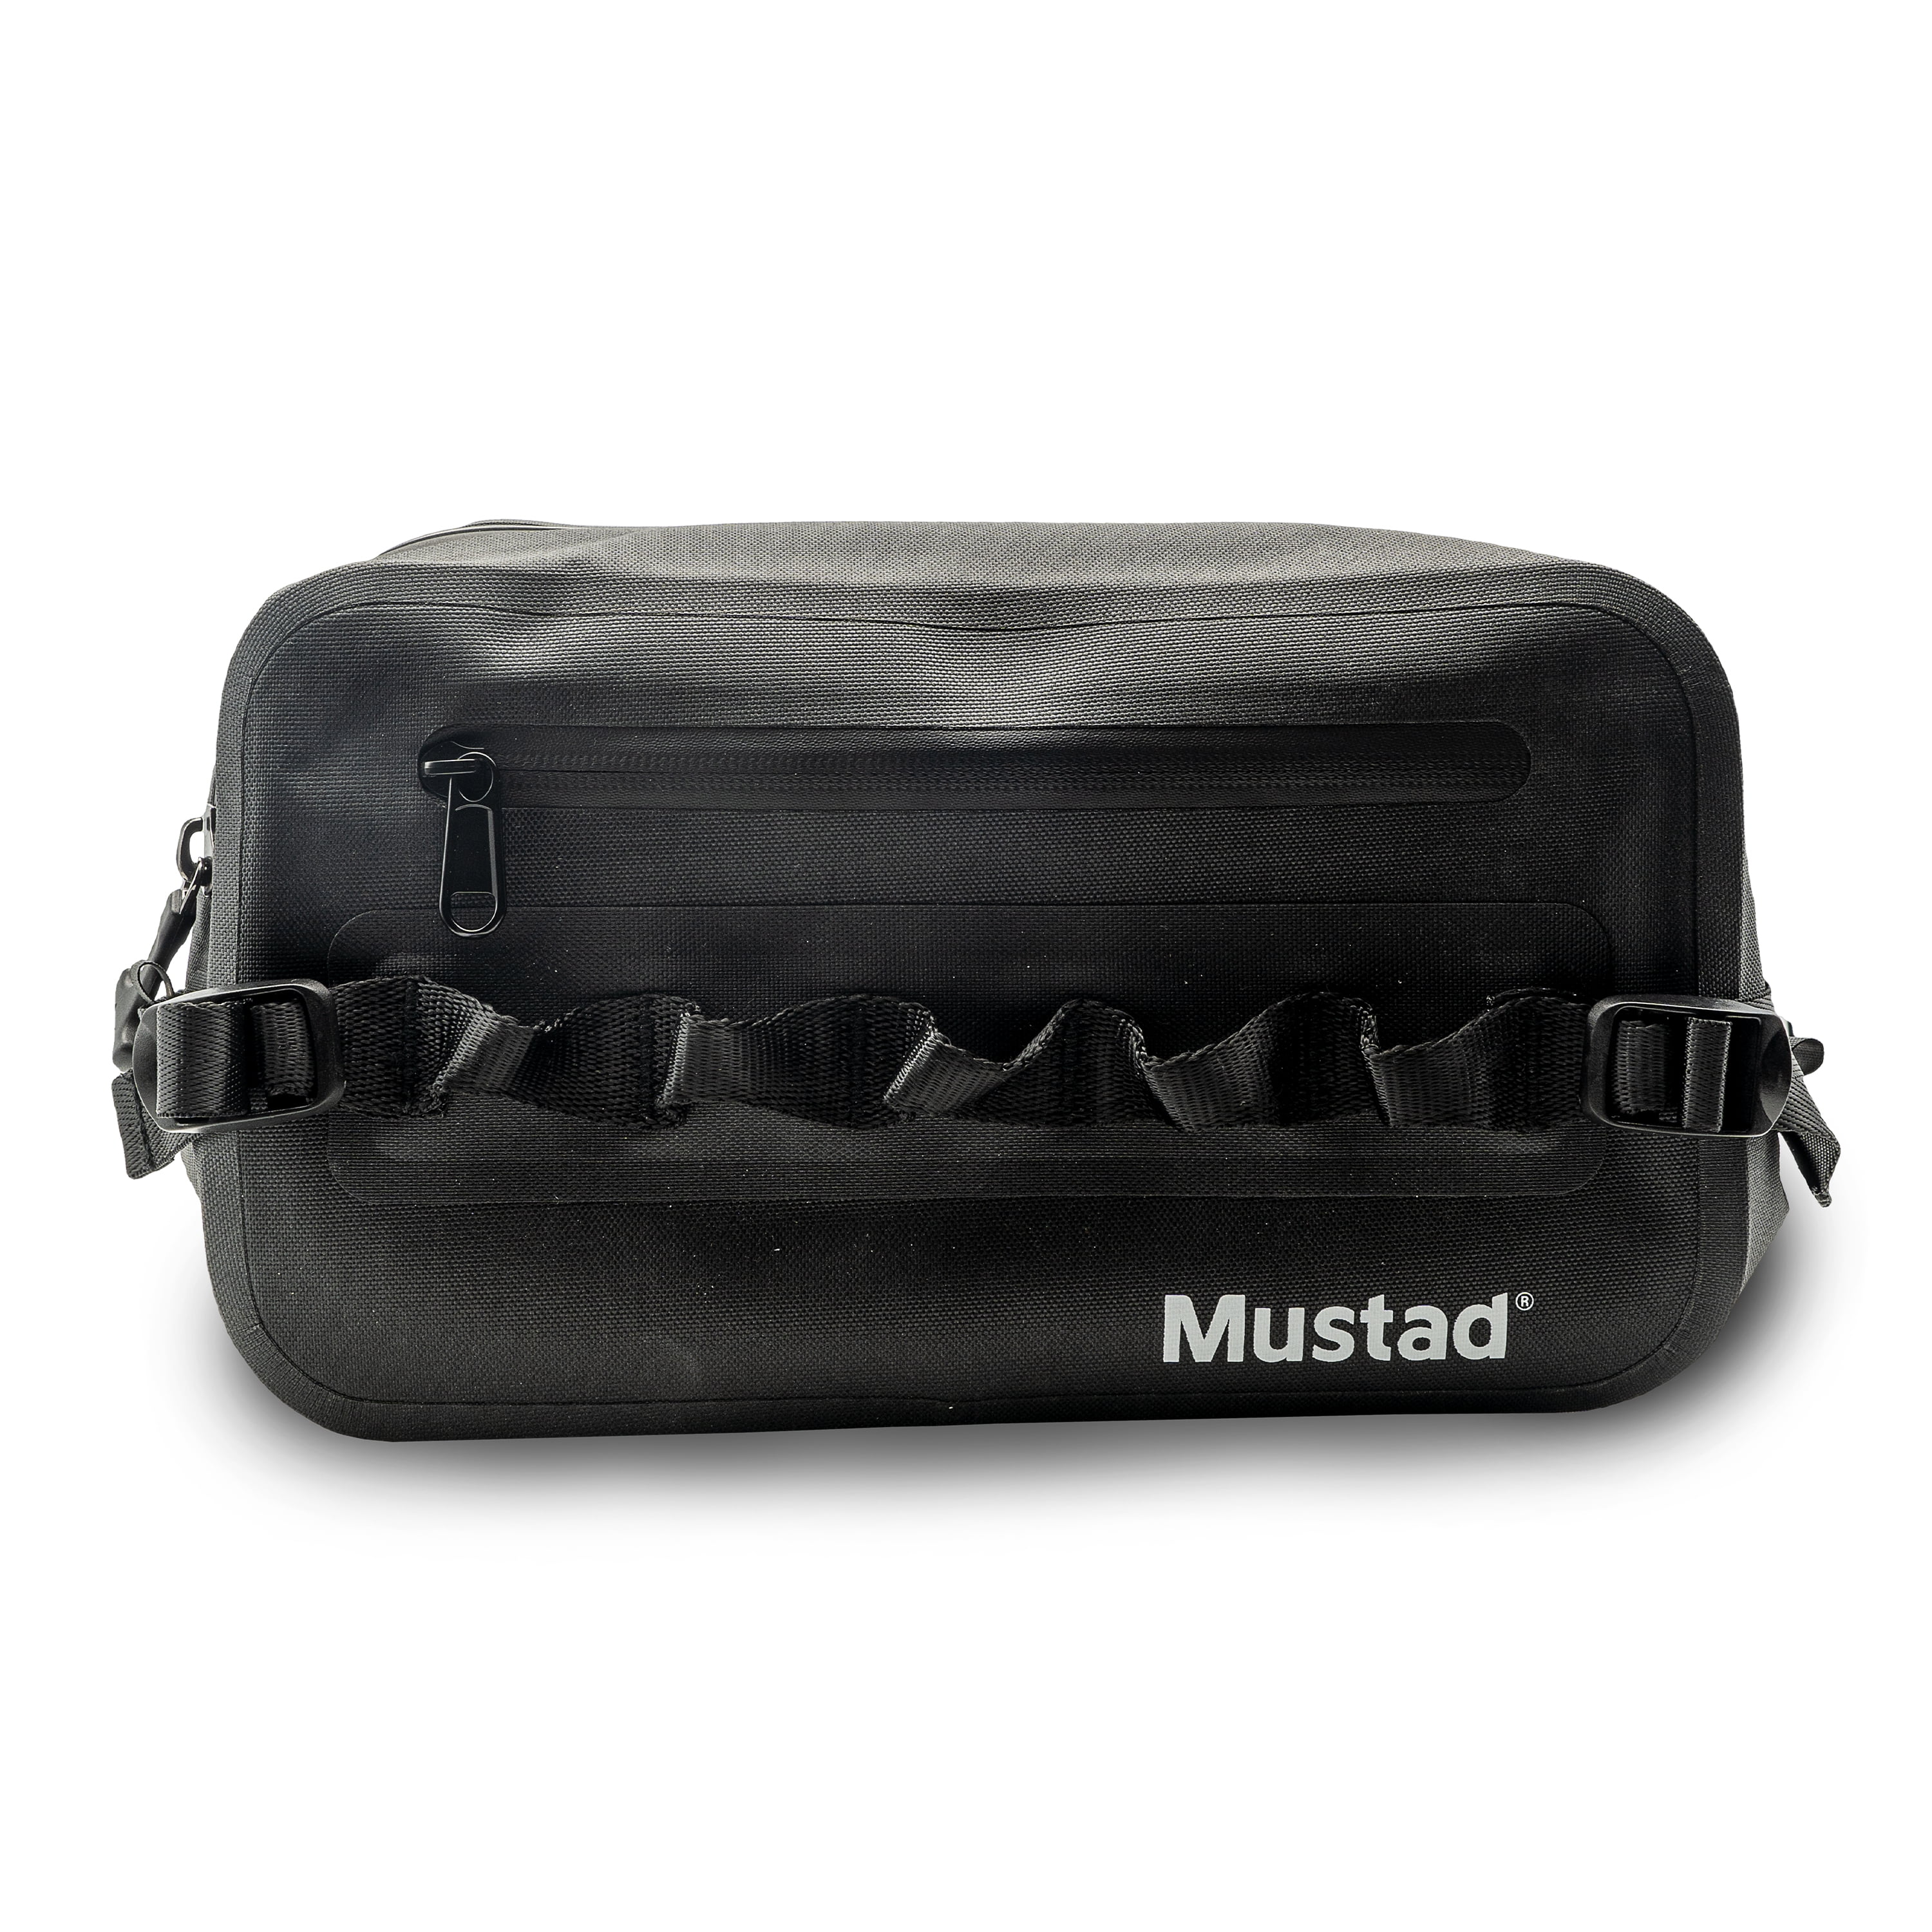 Mustad Bass Wacky Neko Kit - Includes Waist Bag, Palestine